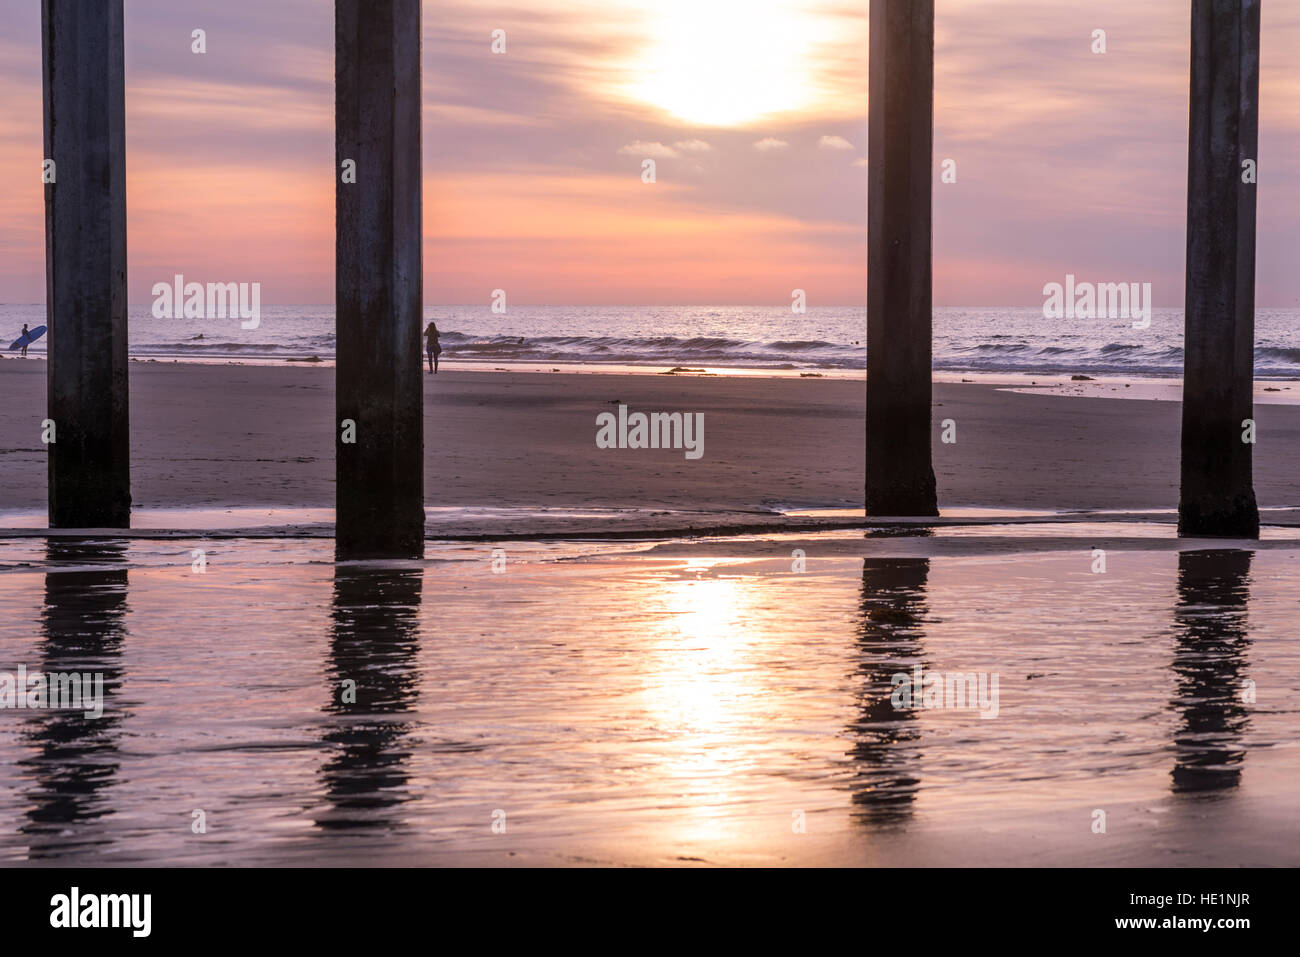 Scripps Pier pilings, coastal sunset view. La Jolla, California. Stock Photo